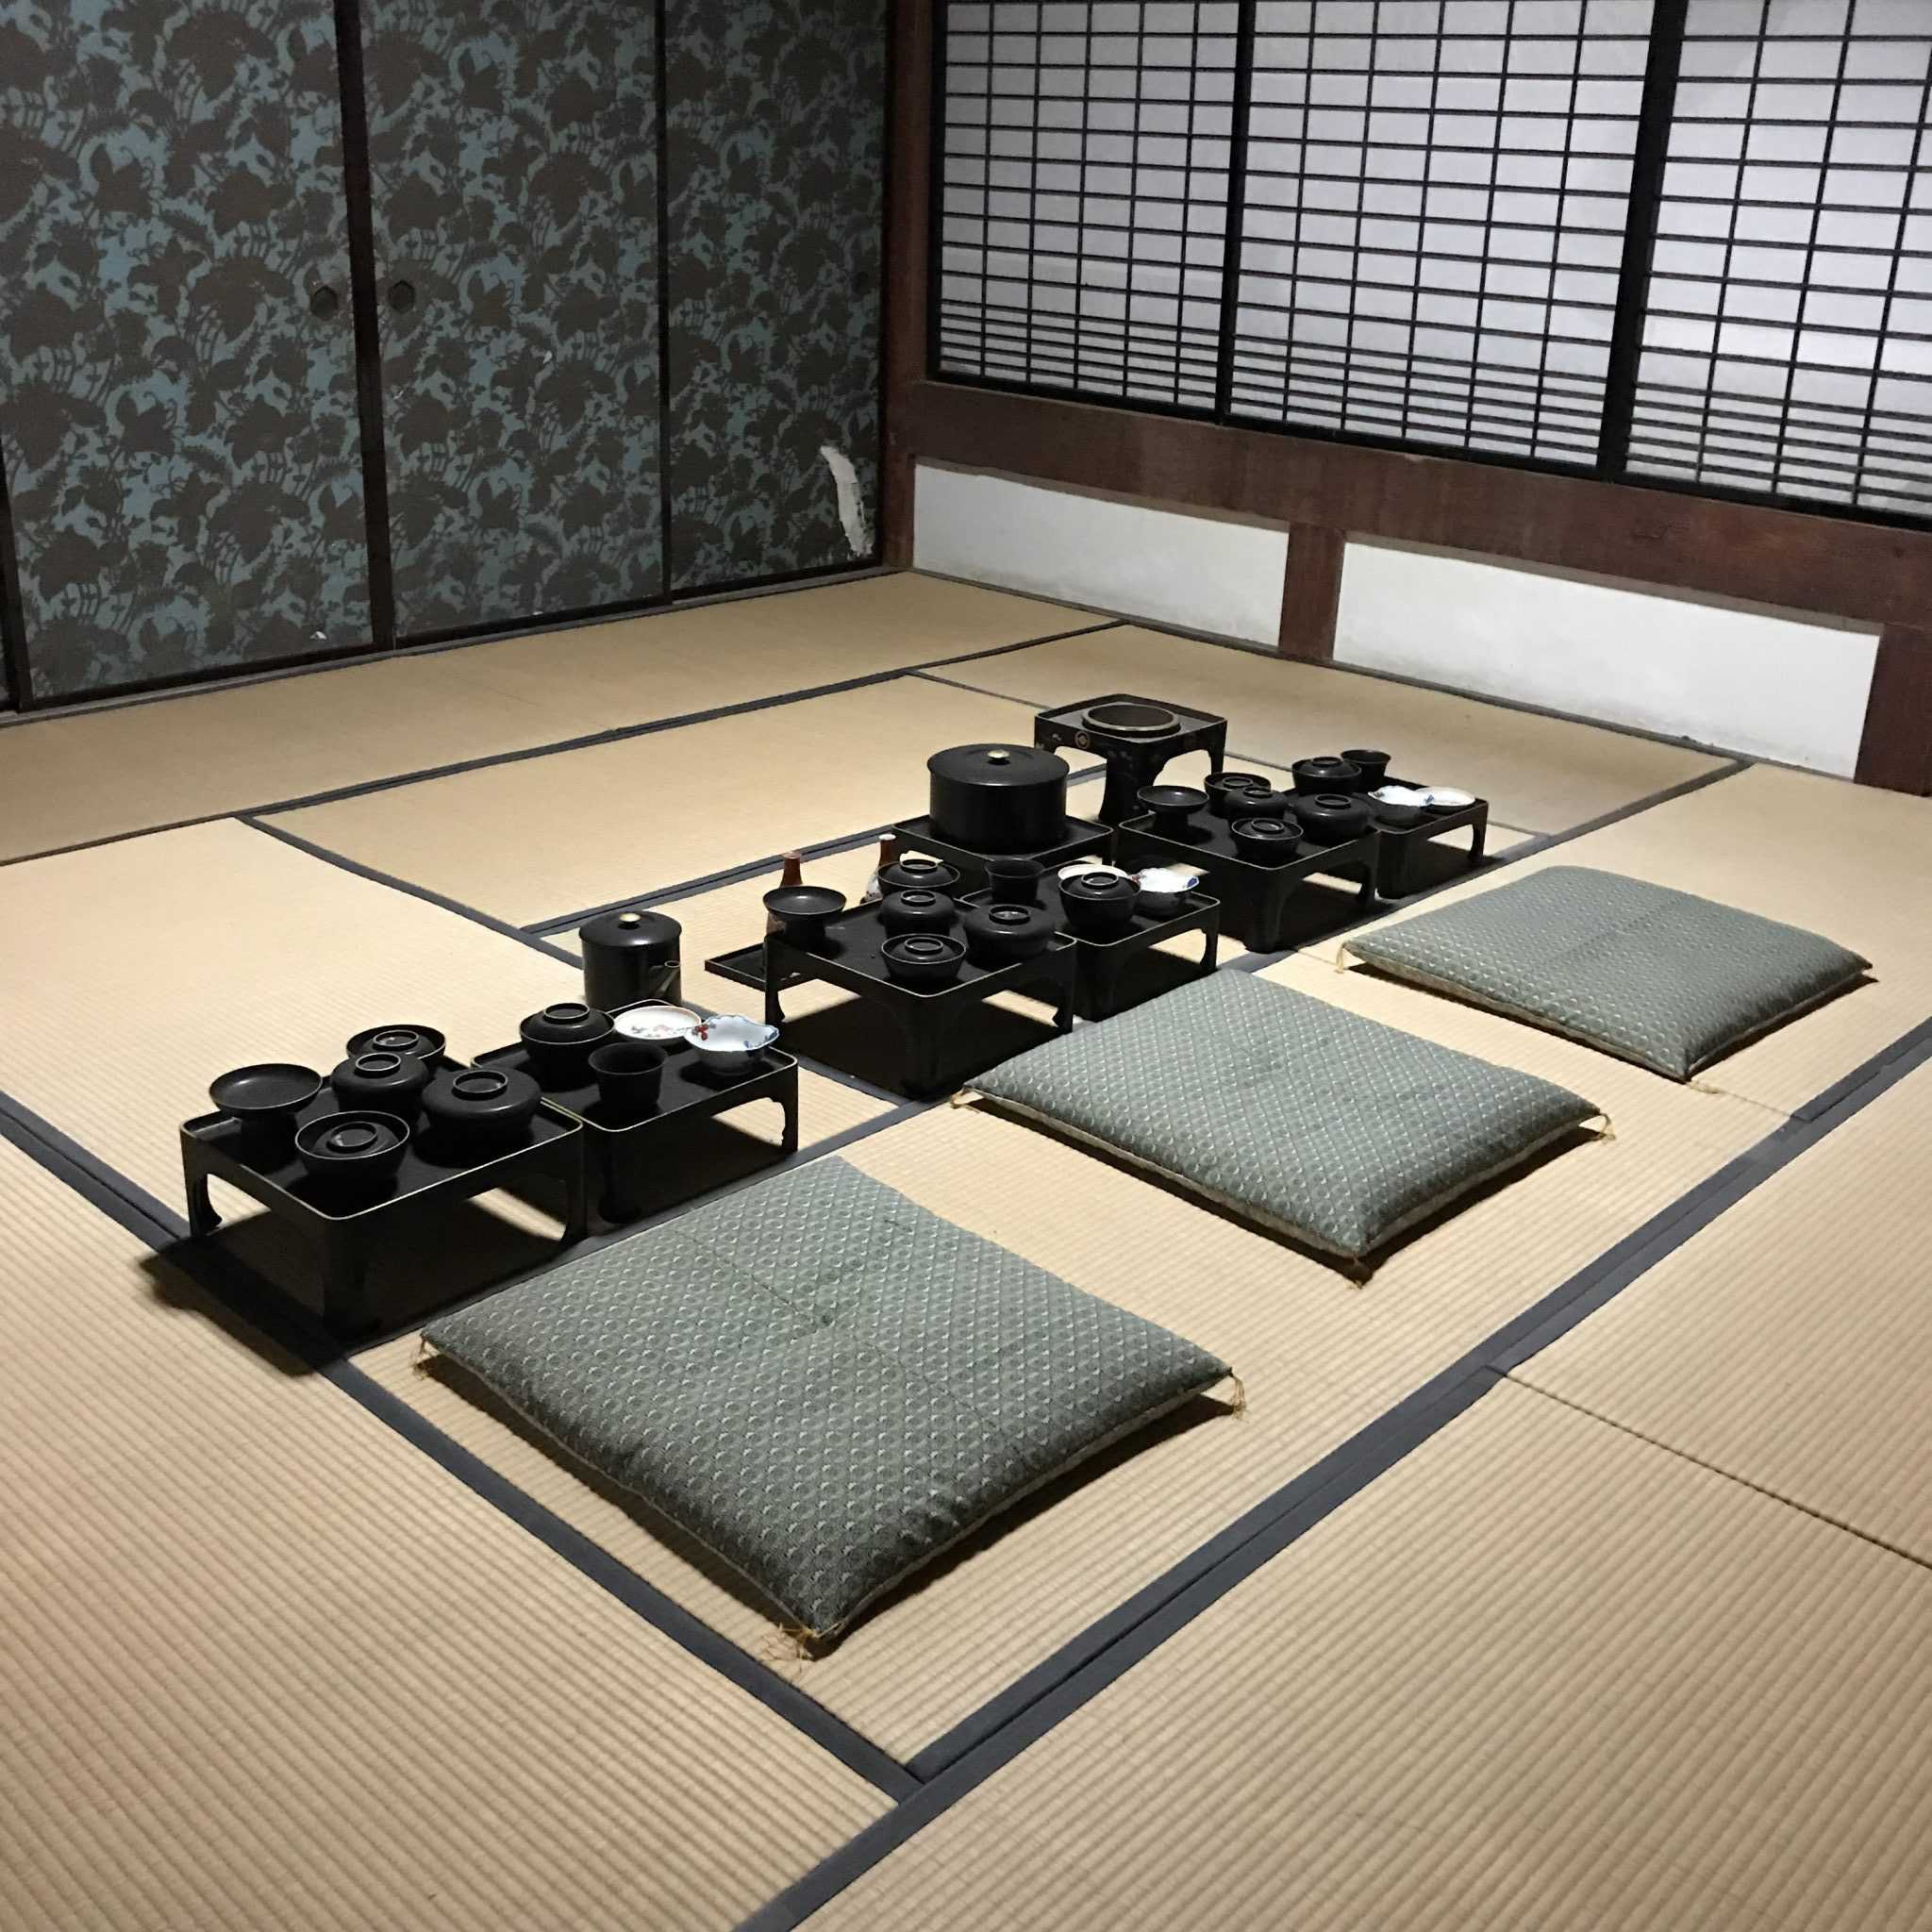 A Japanese room